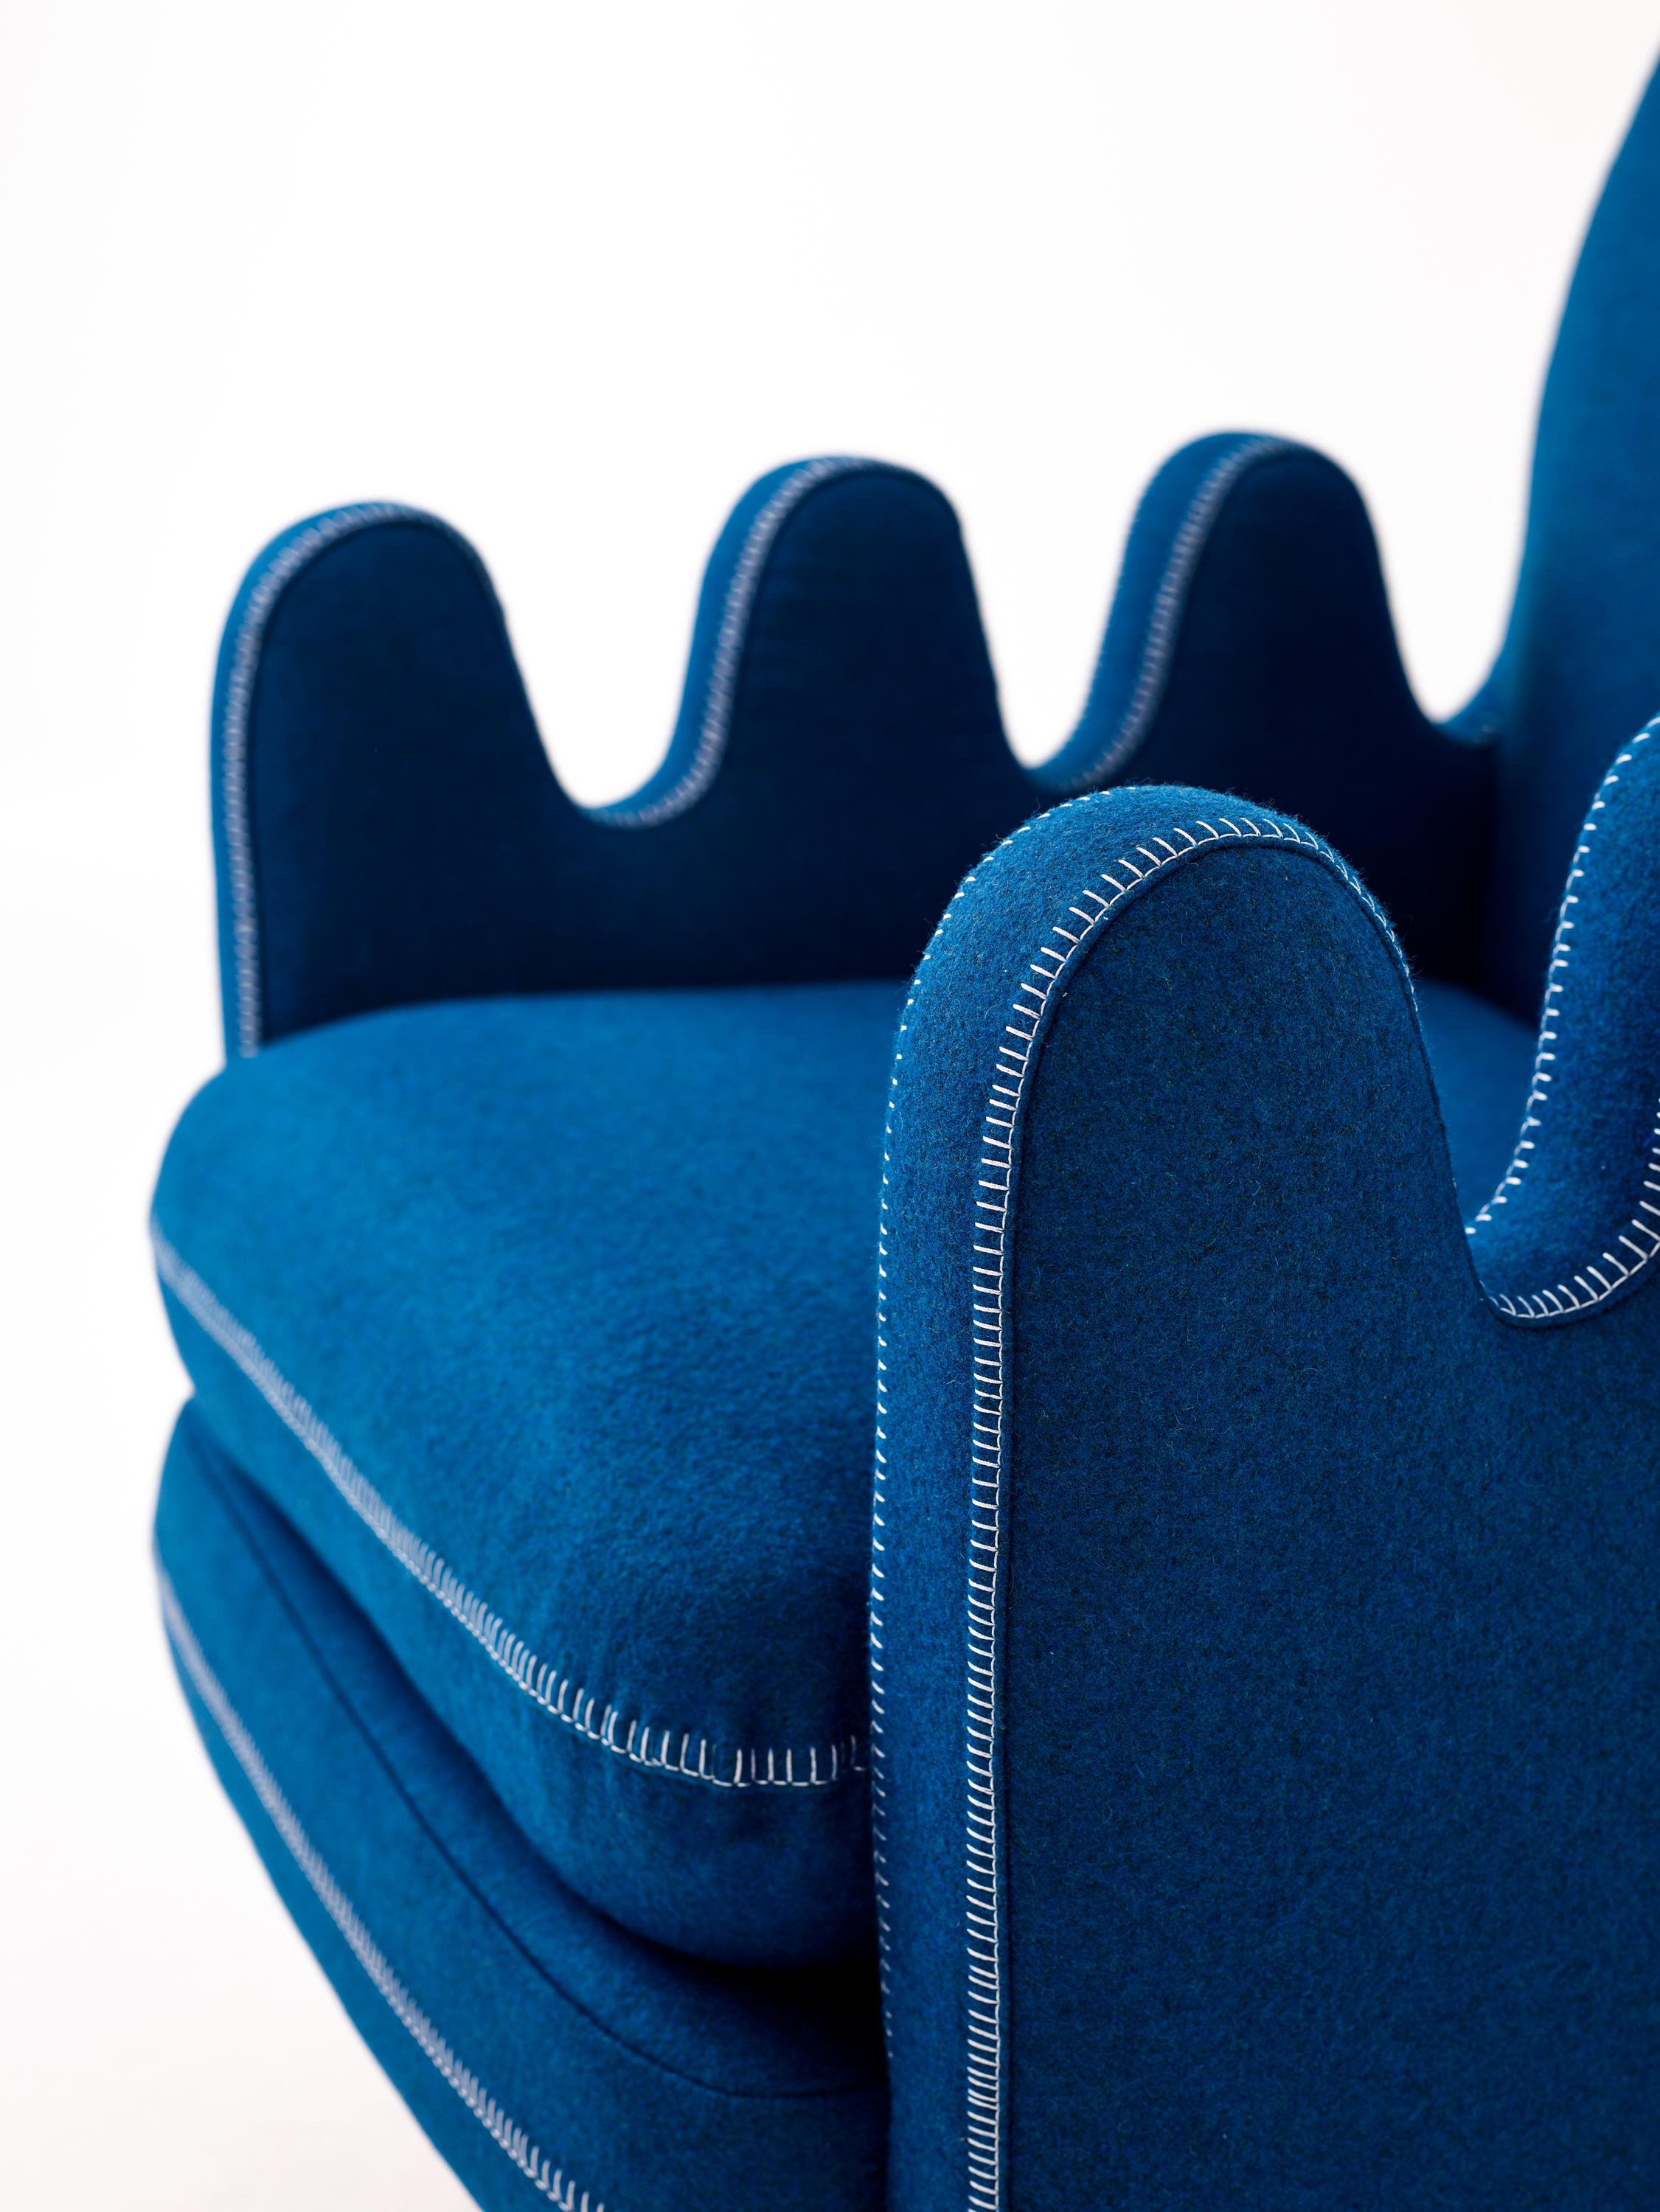 Semo-Sessel mit marineblauem Stoff und poliertem Wurzelholz im Angebot 6